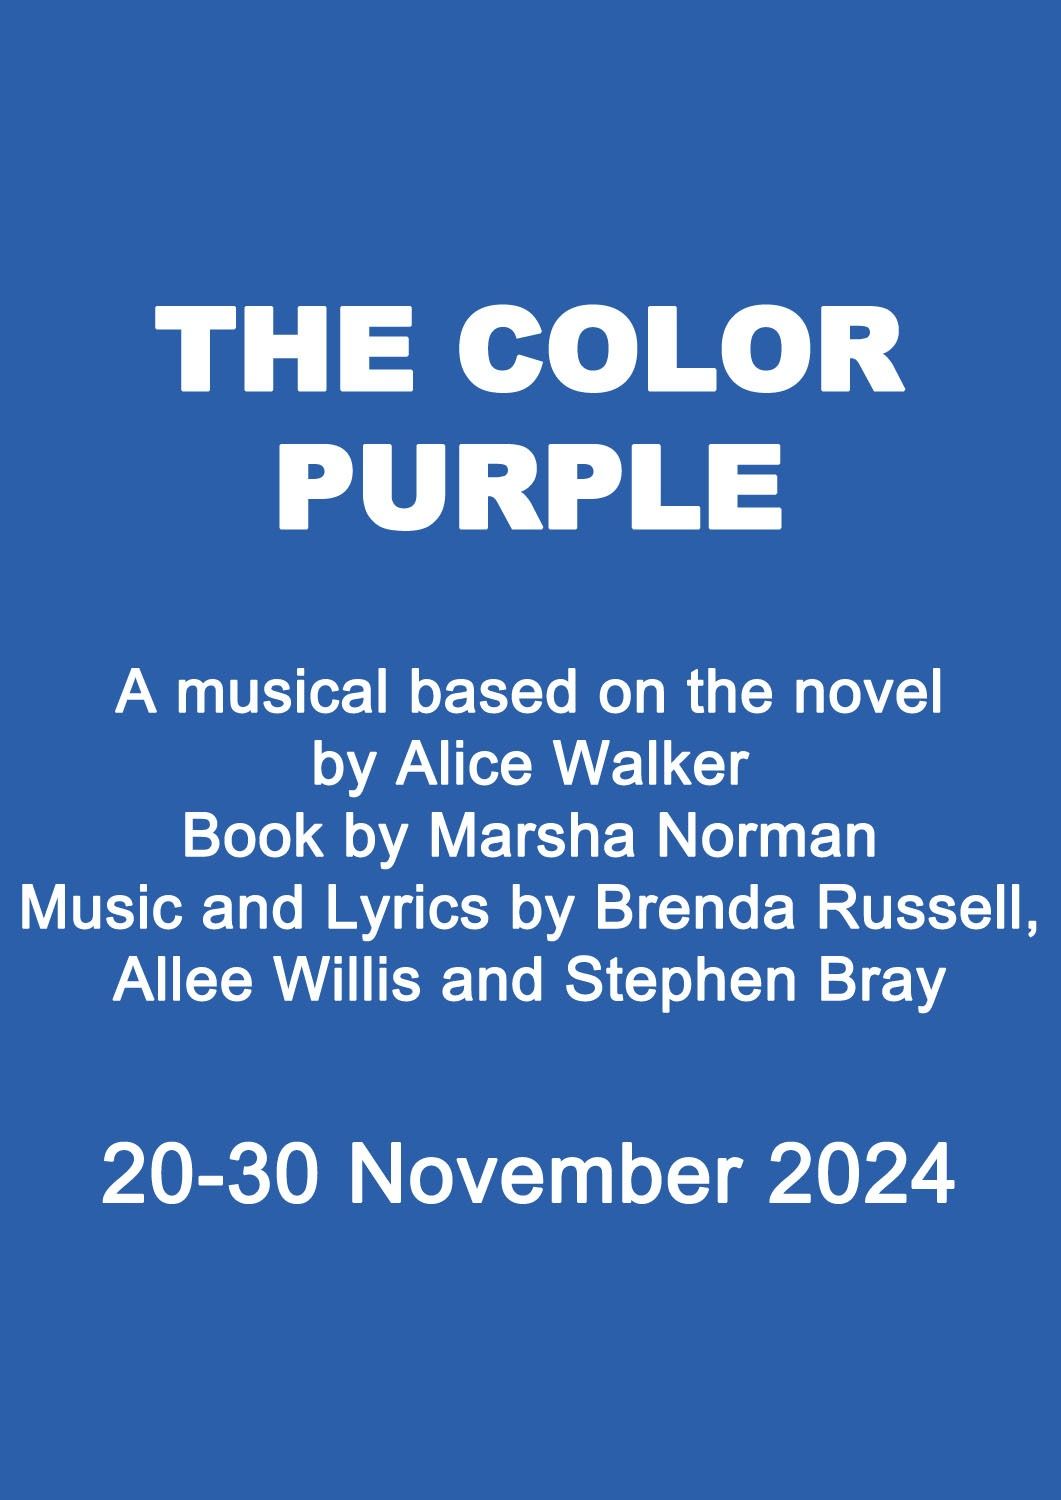 The Color Purple flyer image